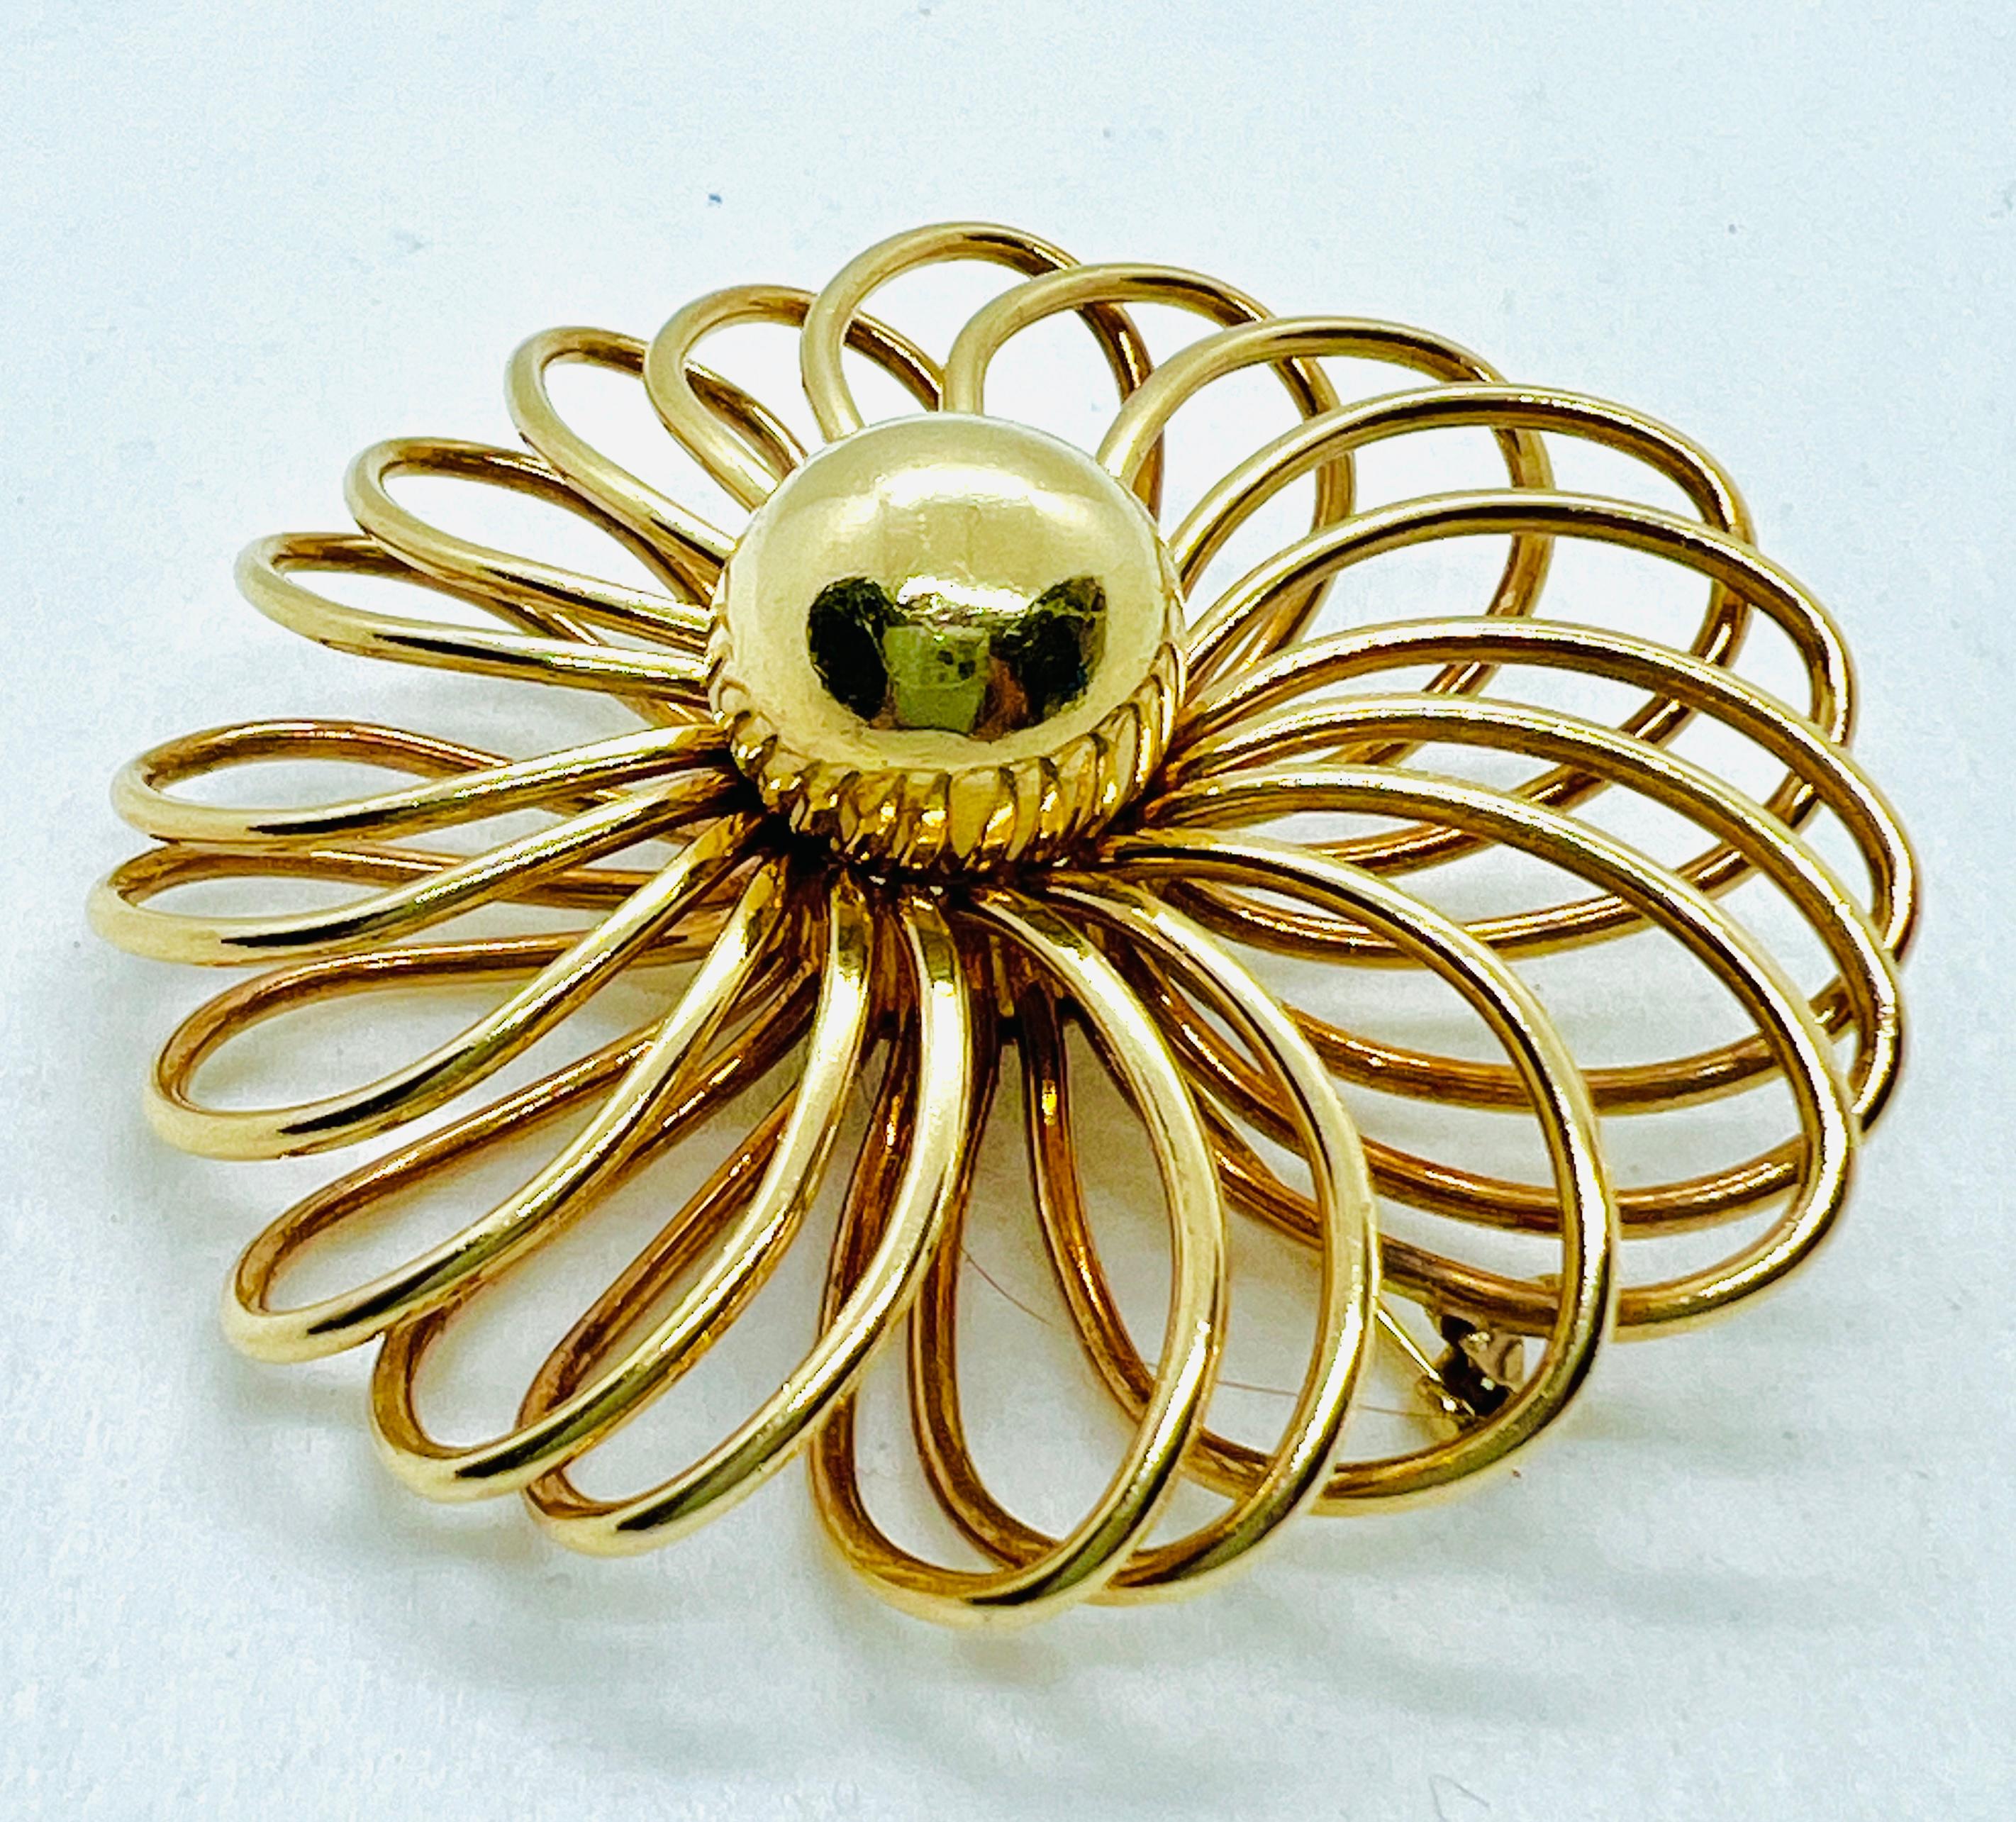 Artist Vintage Cartier 14K yellow Gold Spiral Design 53mm Round Brooch For Sale